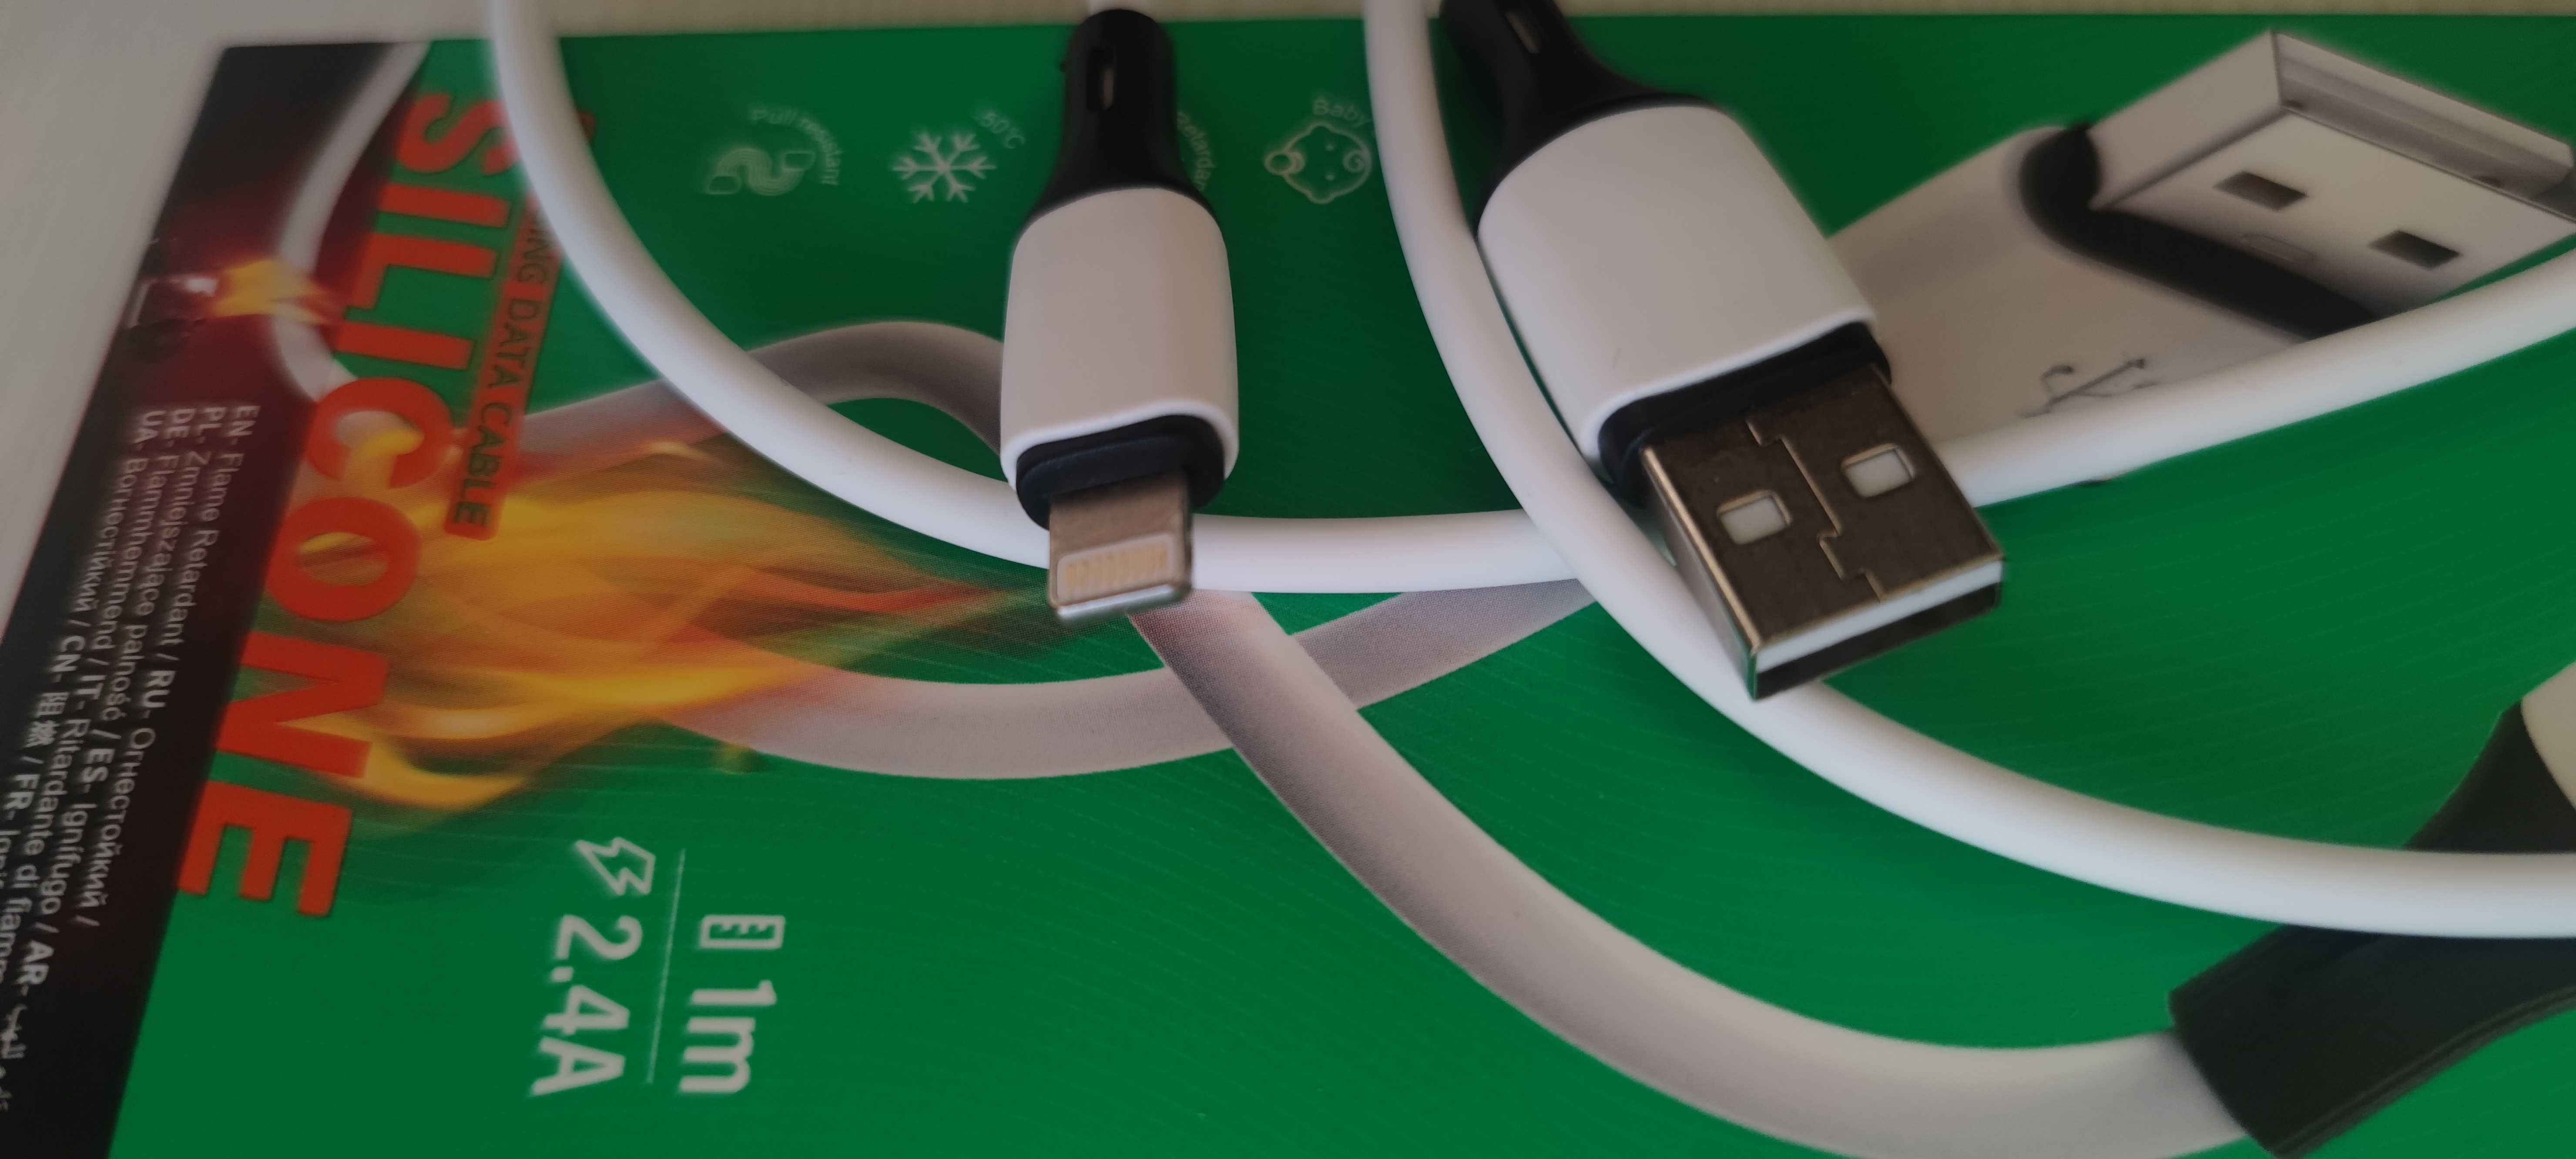 USB кабель для IPHONE Borofone BX79 Silicone Lightning 2.4A 1m